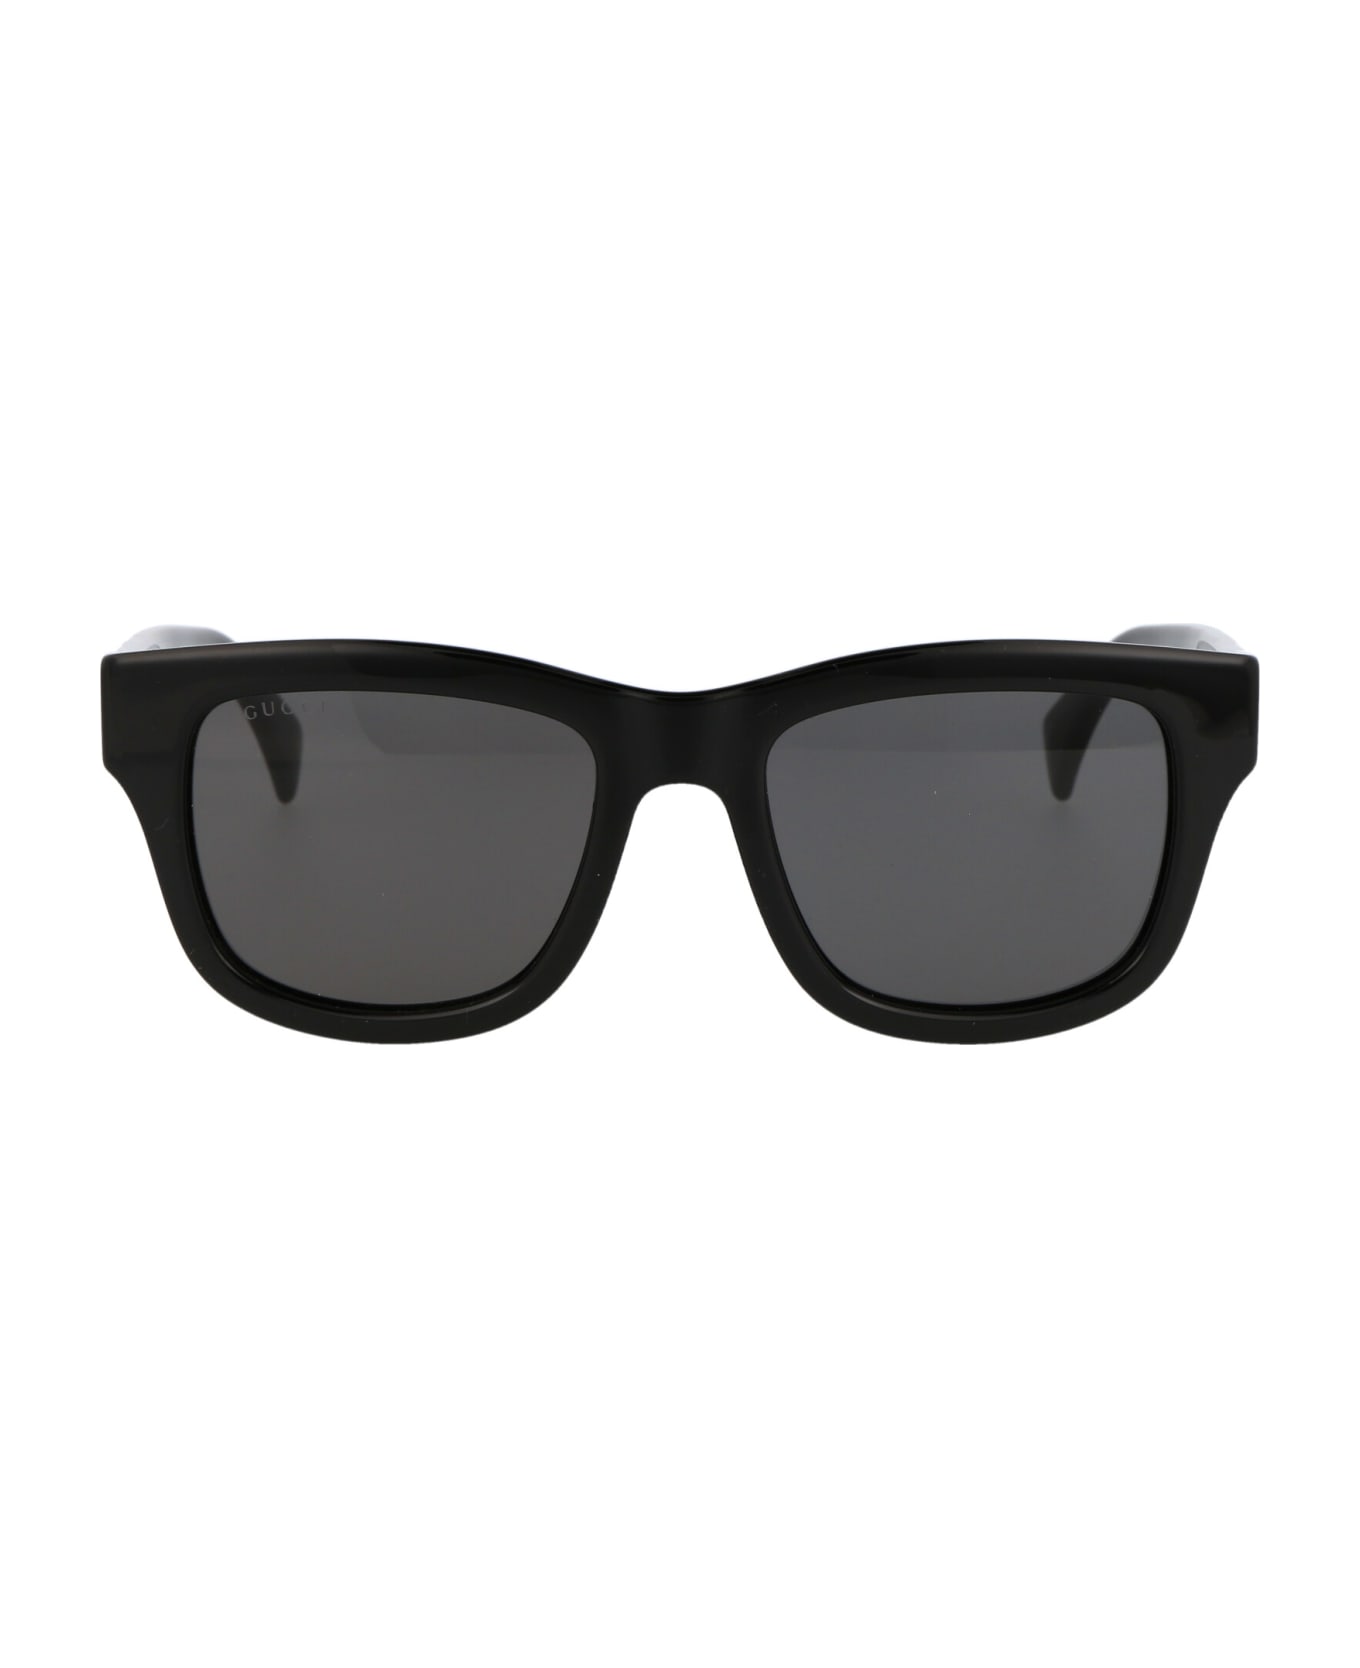 Gucci Eyewear Gg1135s Sunglasses - 002 BLACK BLACK GREY